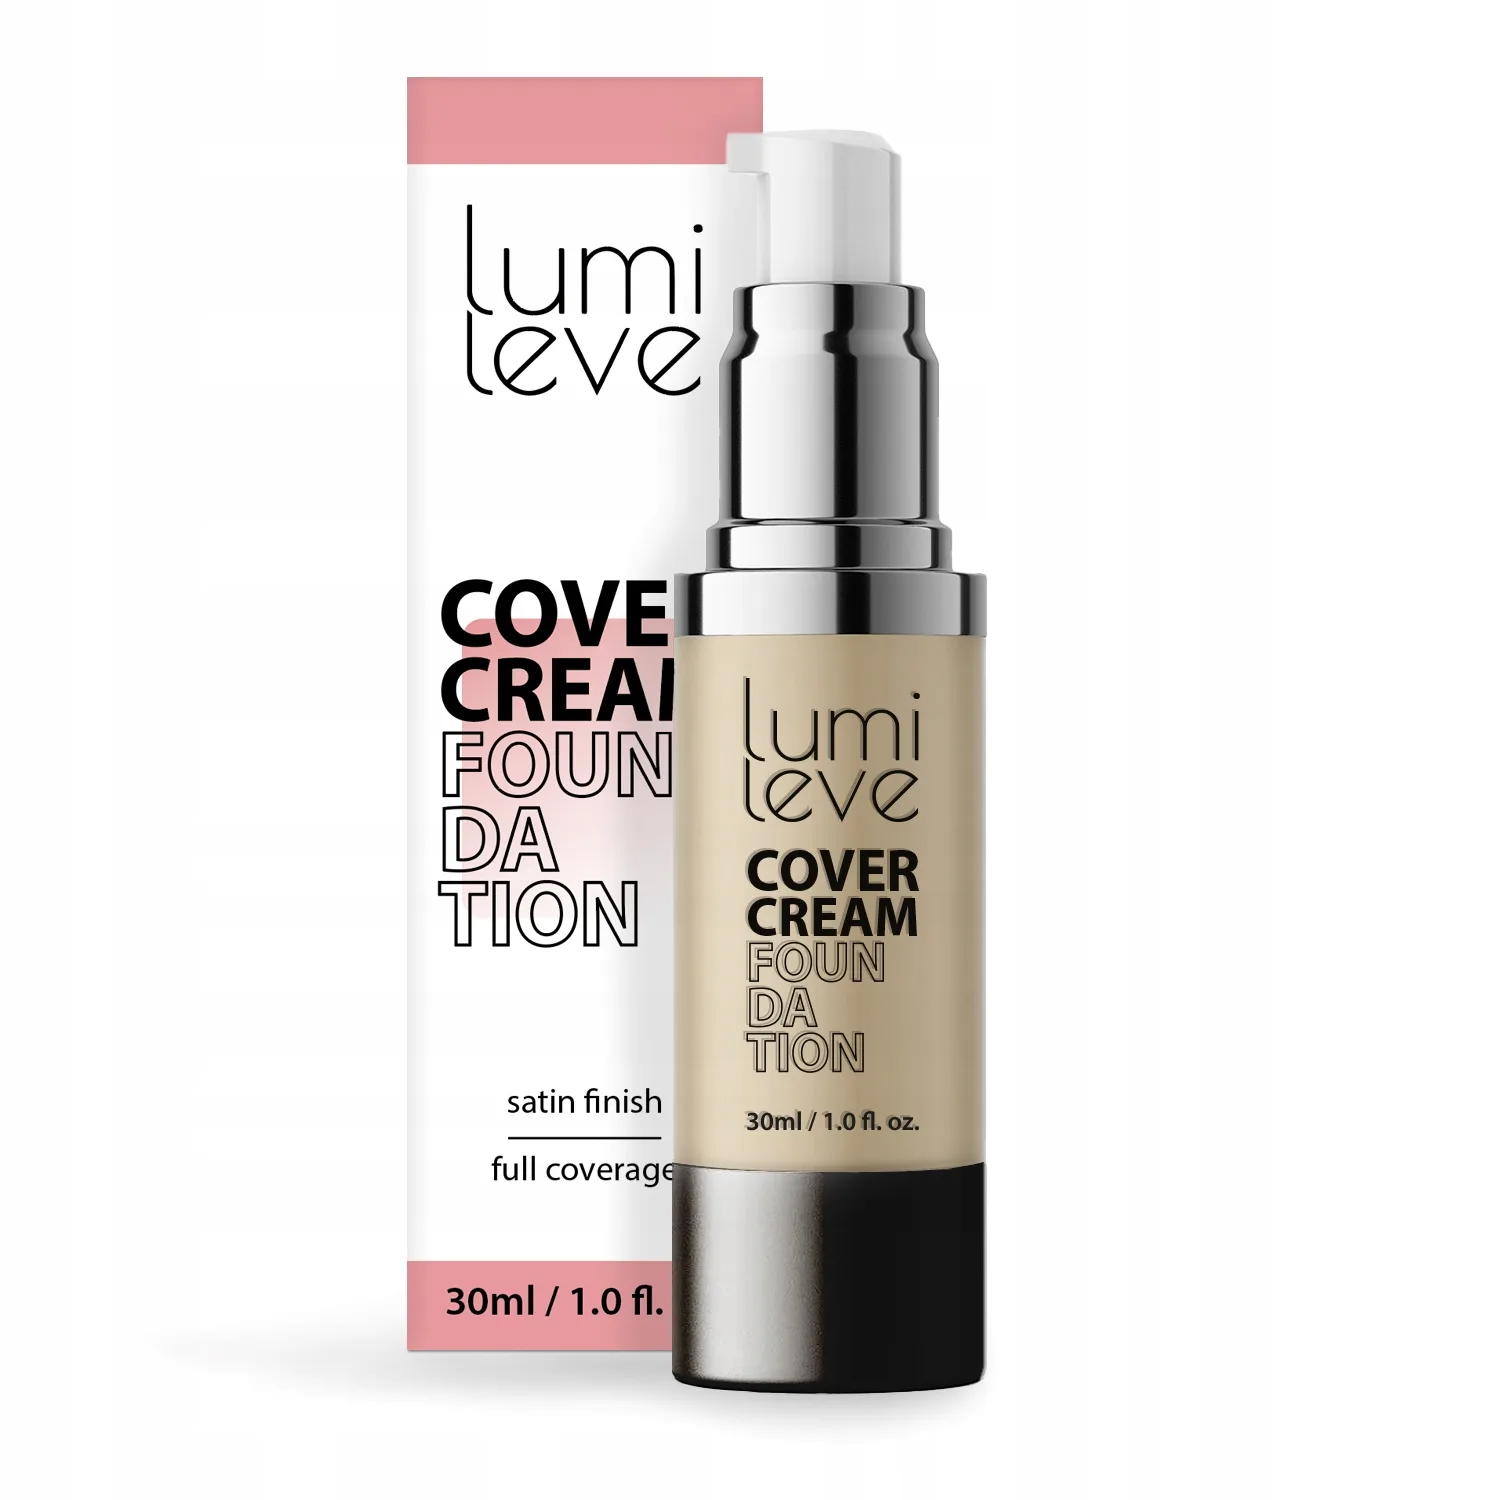 naturalny-fluid-Lumileve-cover-cream-foundation-37